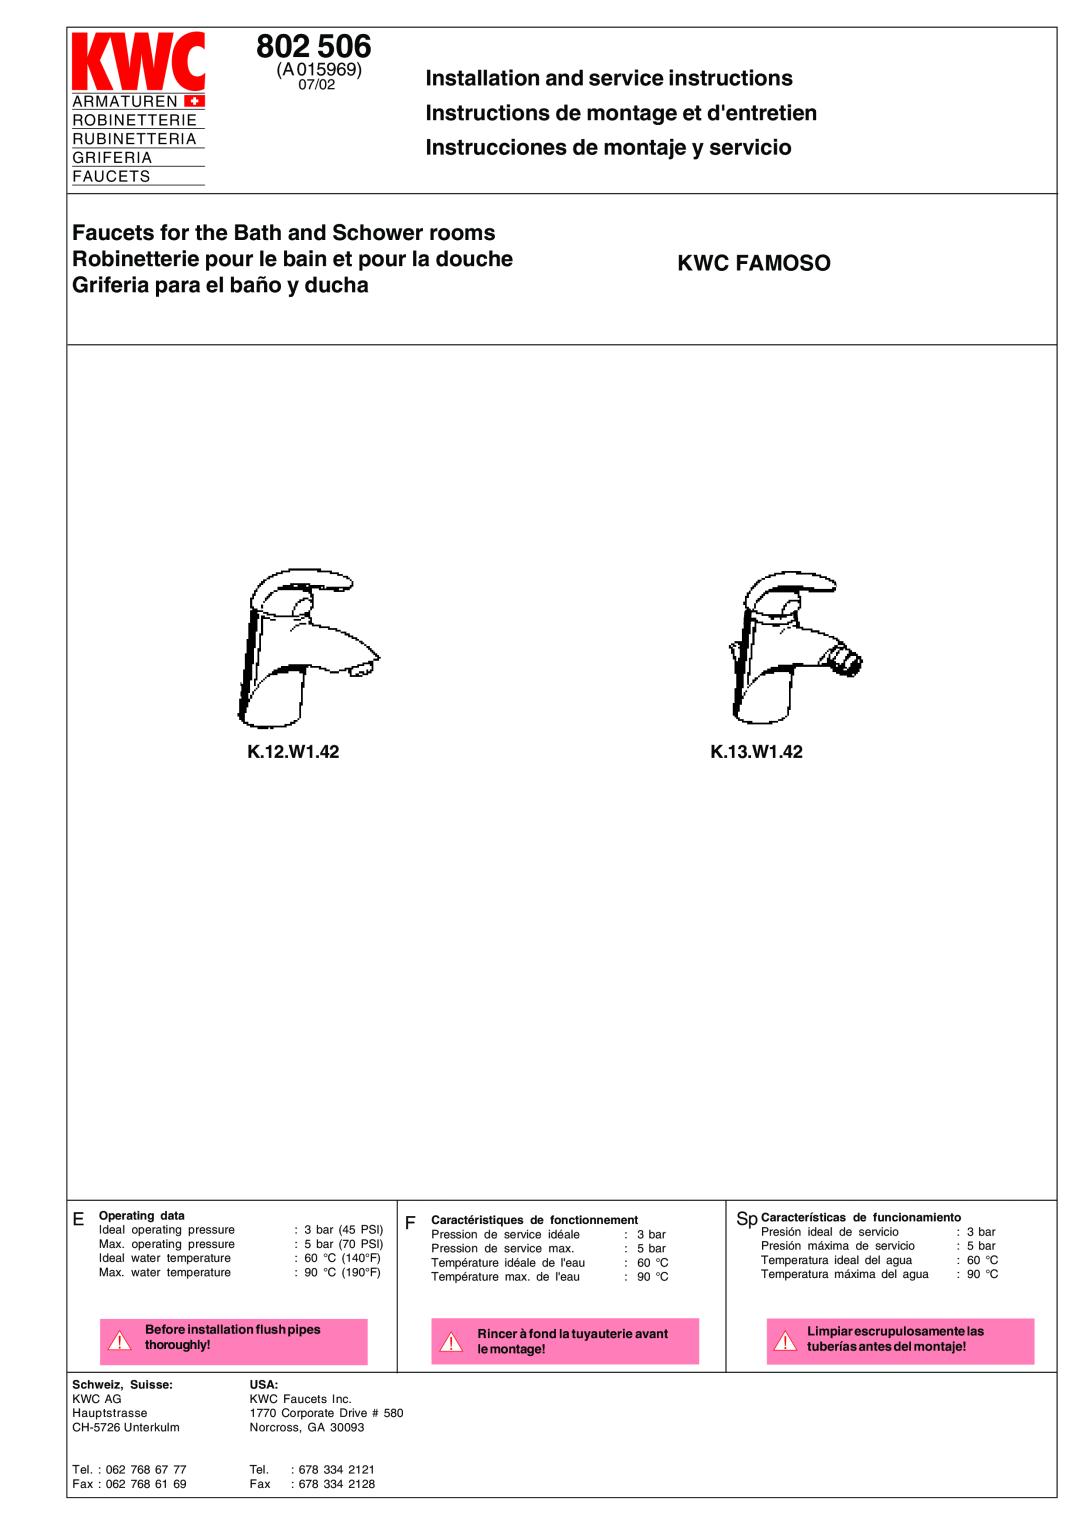 KWC 802 506 manual Installation and service instructions, Instructions de montage et dentretien, K.12.W1.42, K.13.W1.42 